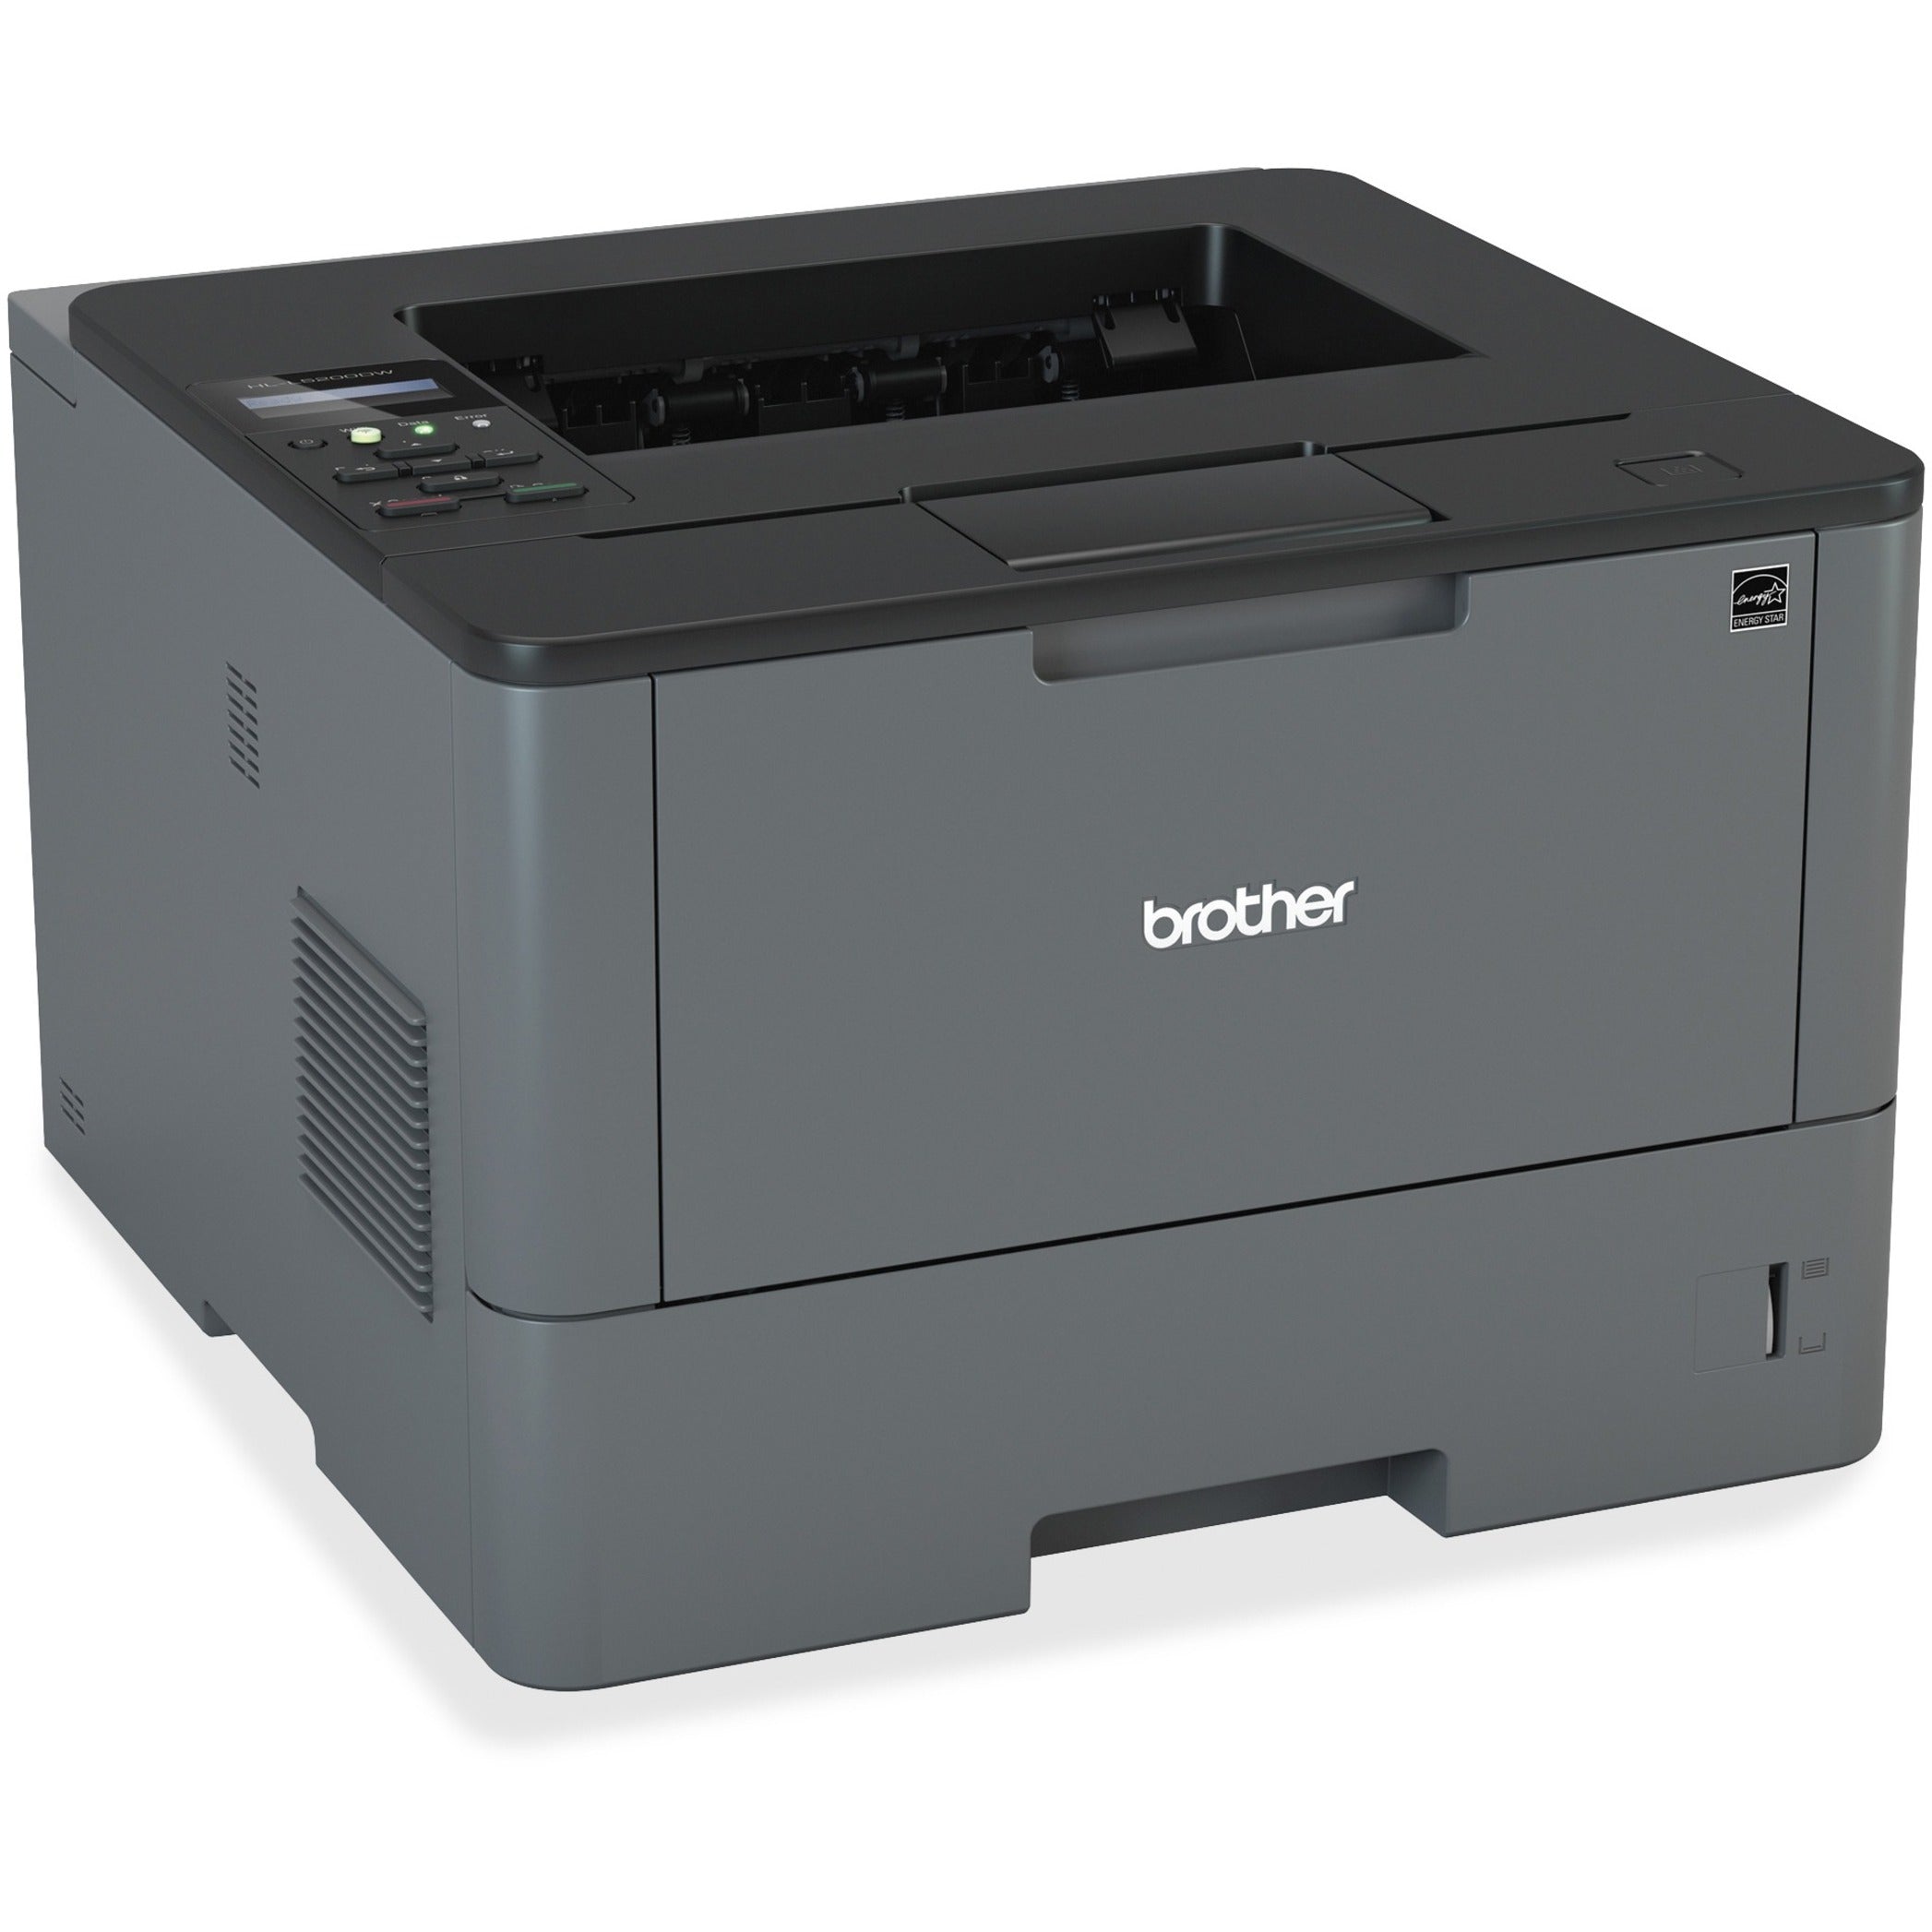 Brother HLL5100DN HL-L5100DN Monochrome Laser Printer, 42ppm, 250-Sheet Capacity